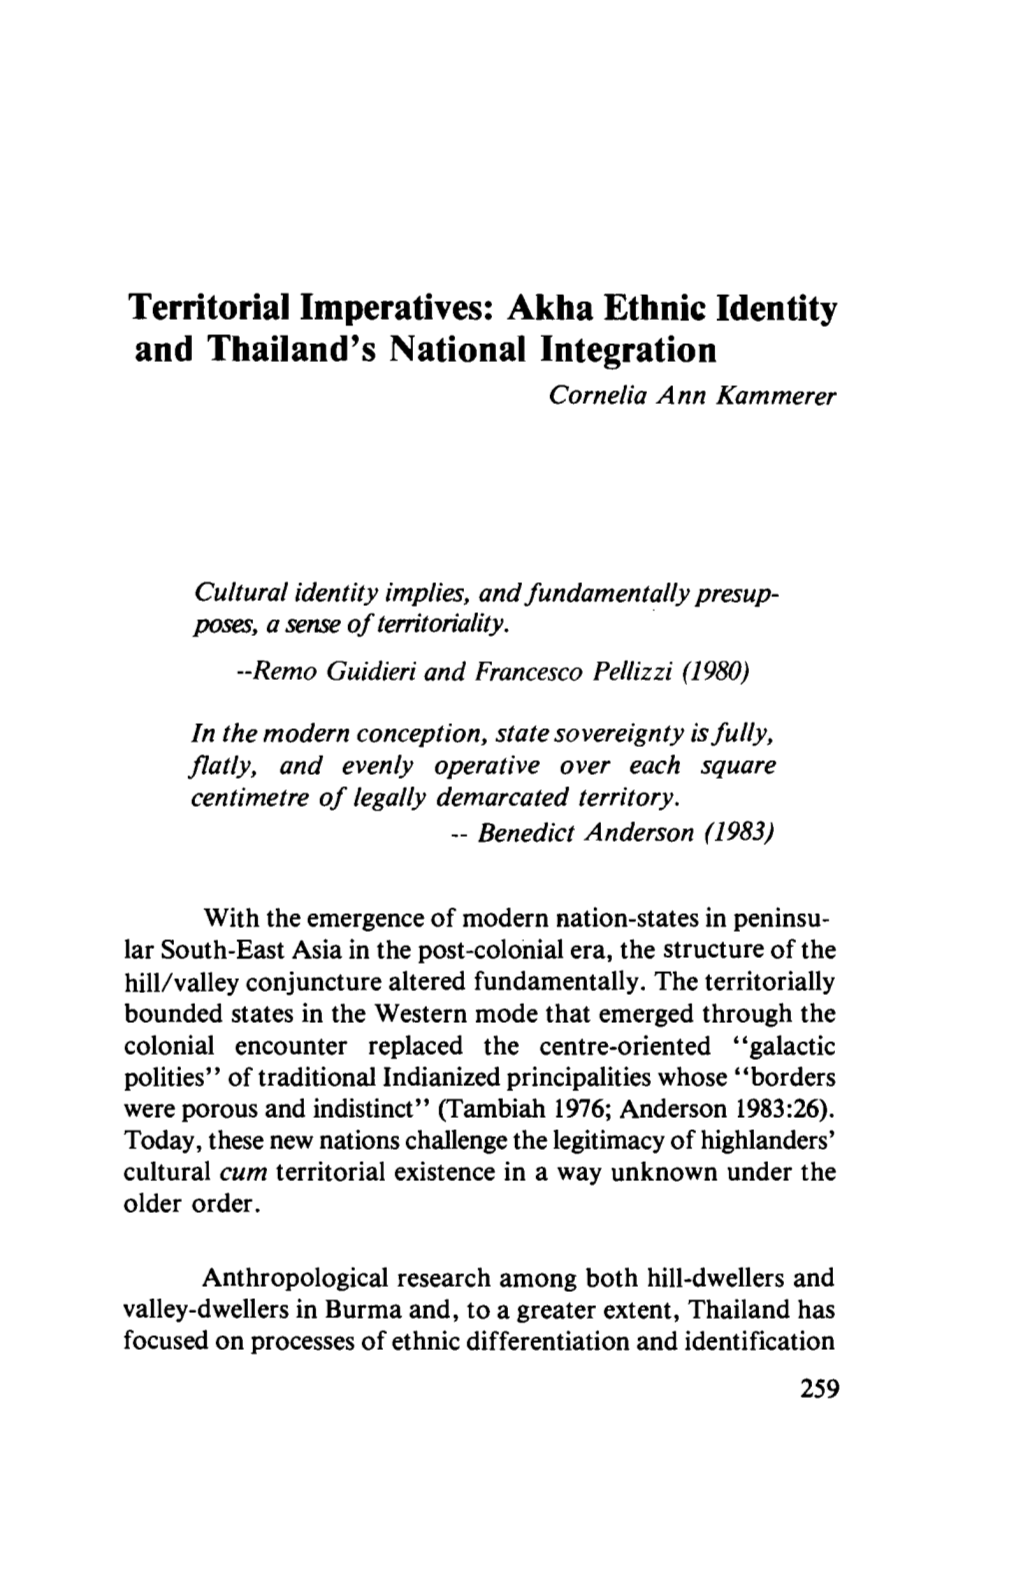 Akha Ethnic Identity and Thailand's National Integration